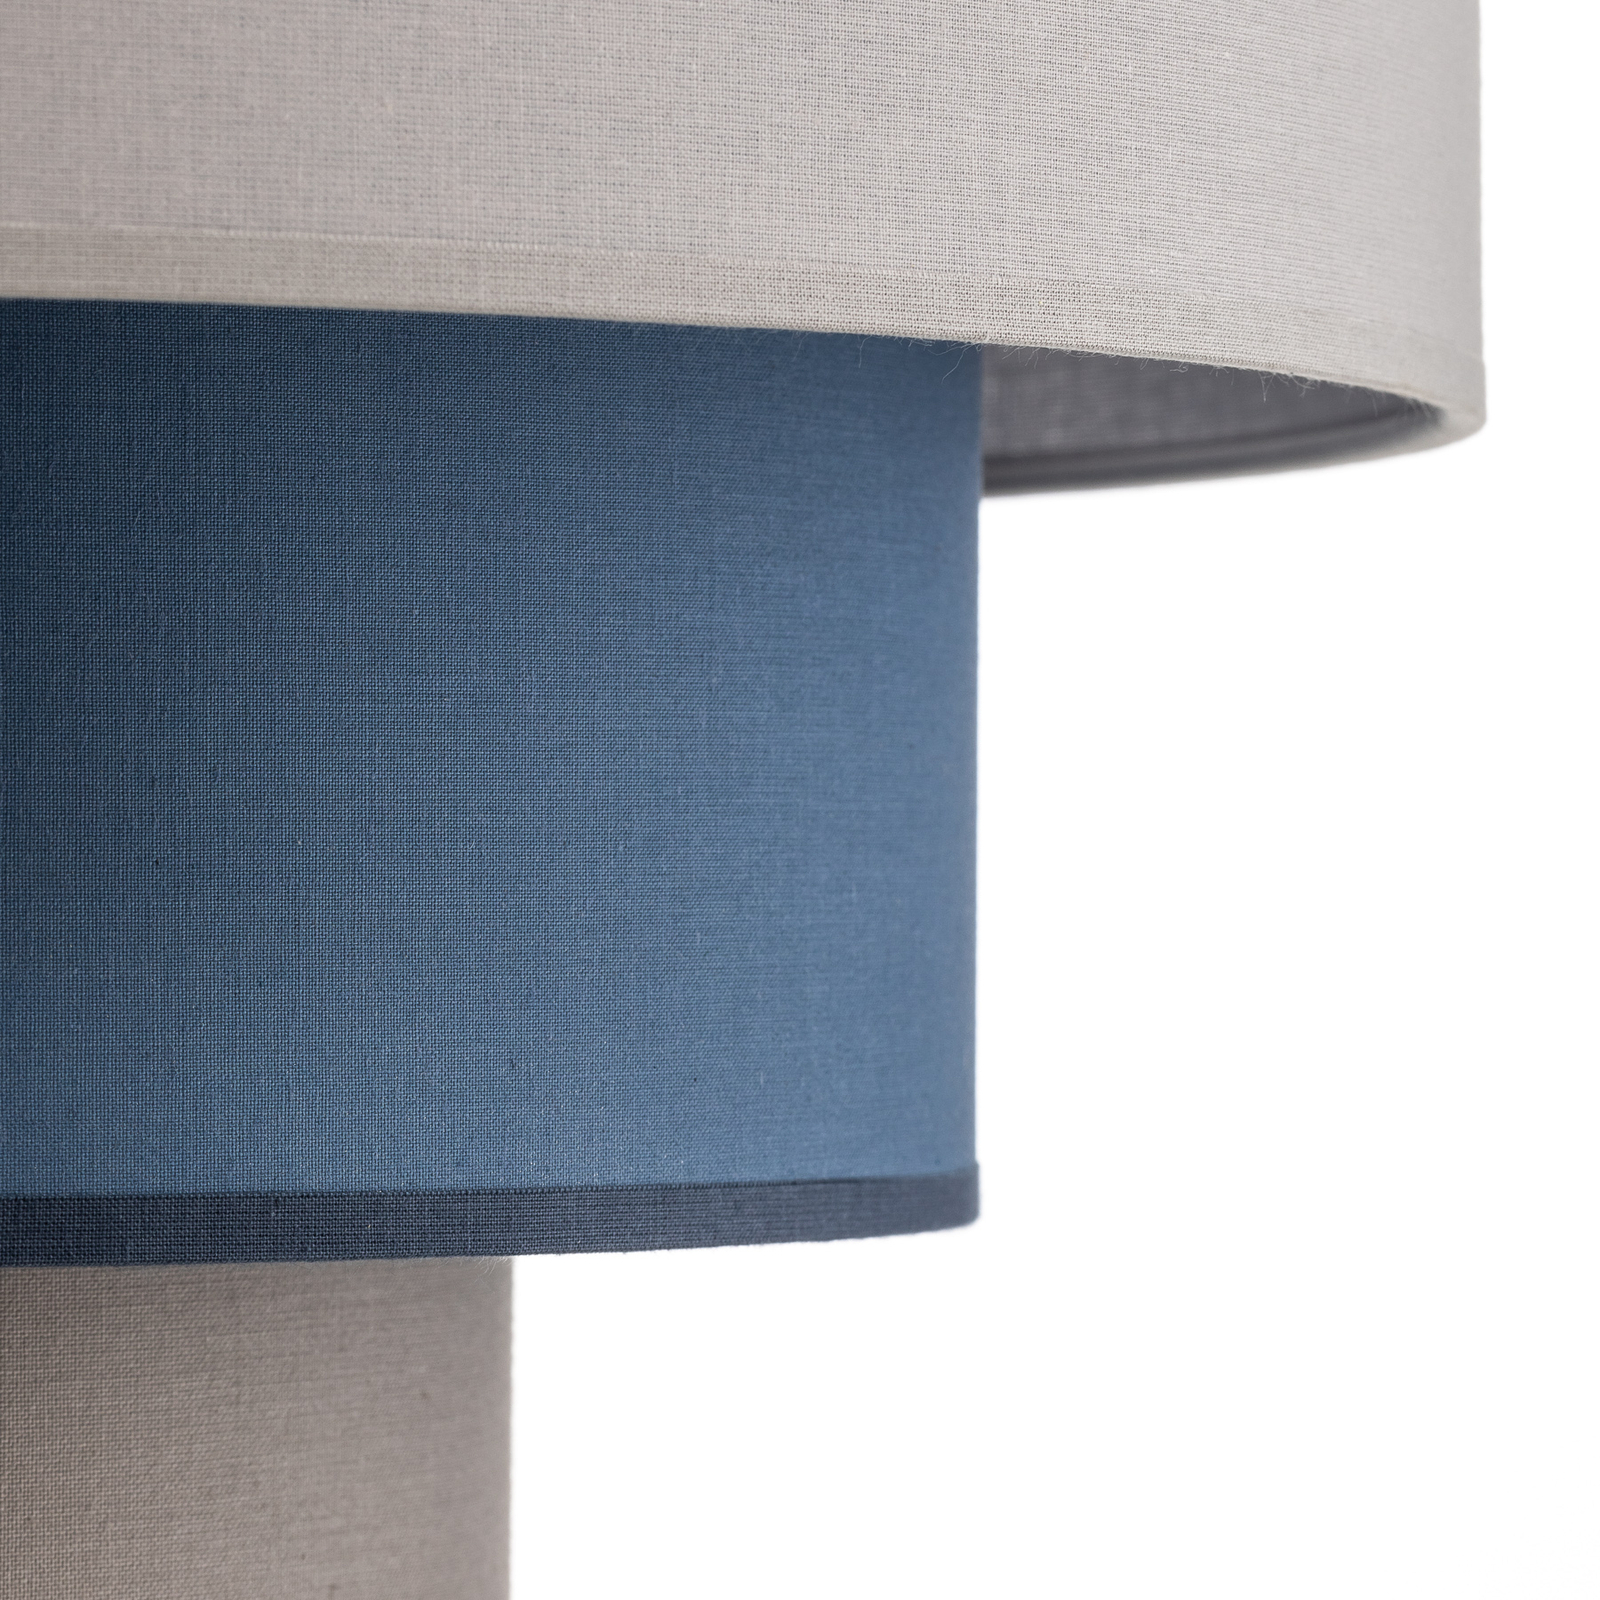 Luneta textile pendant light, grey/navy blue, Ø45cm